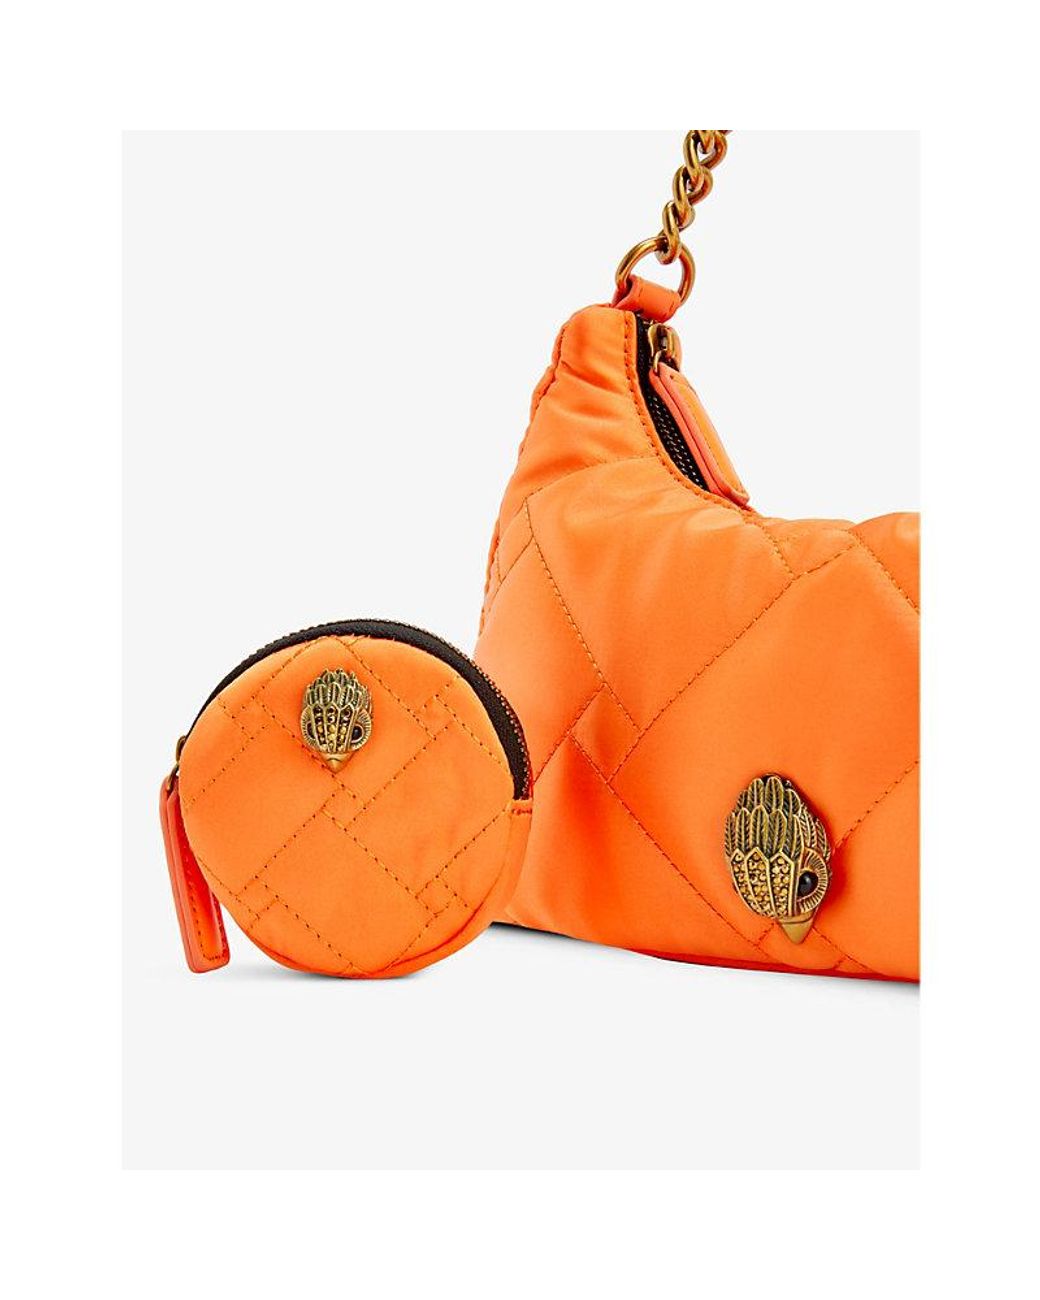 Repurposed Chanel Scarf Crossbody Bag